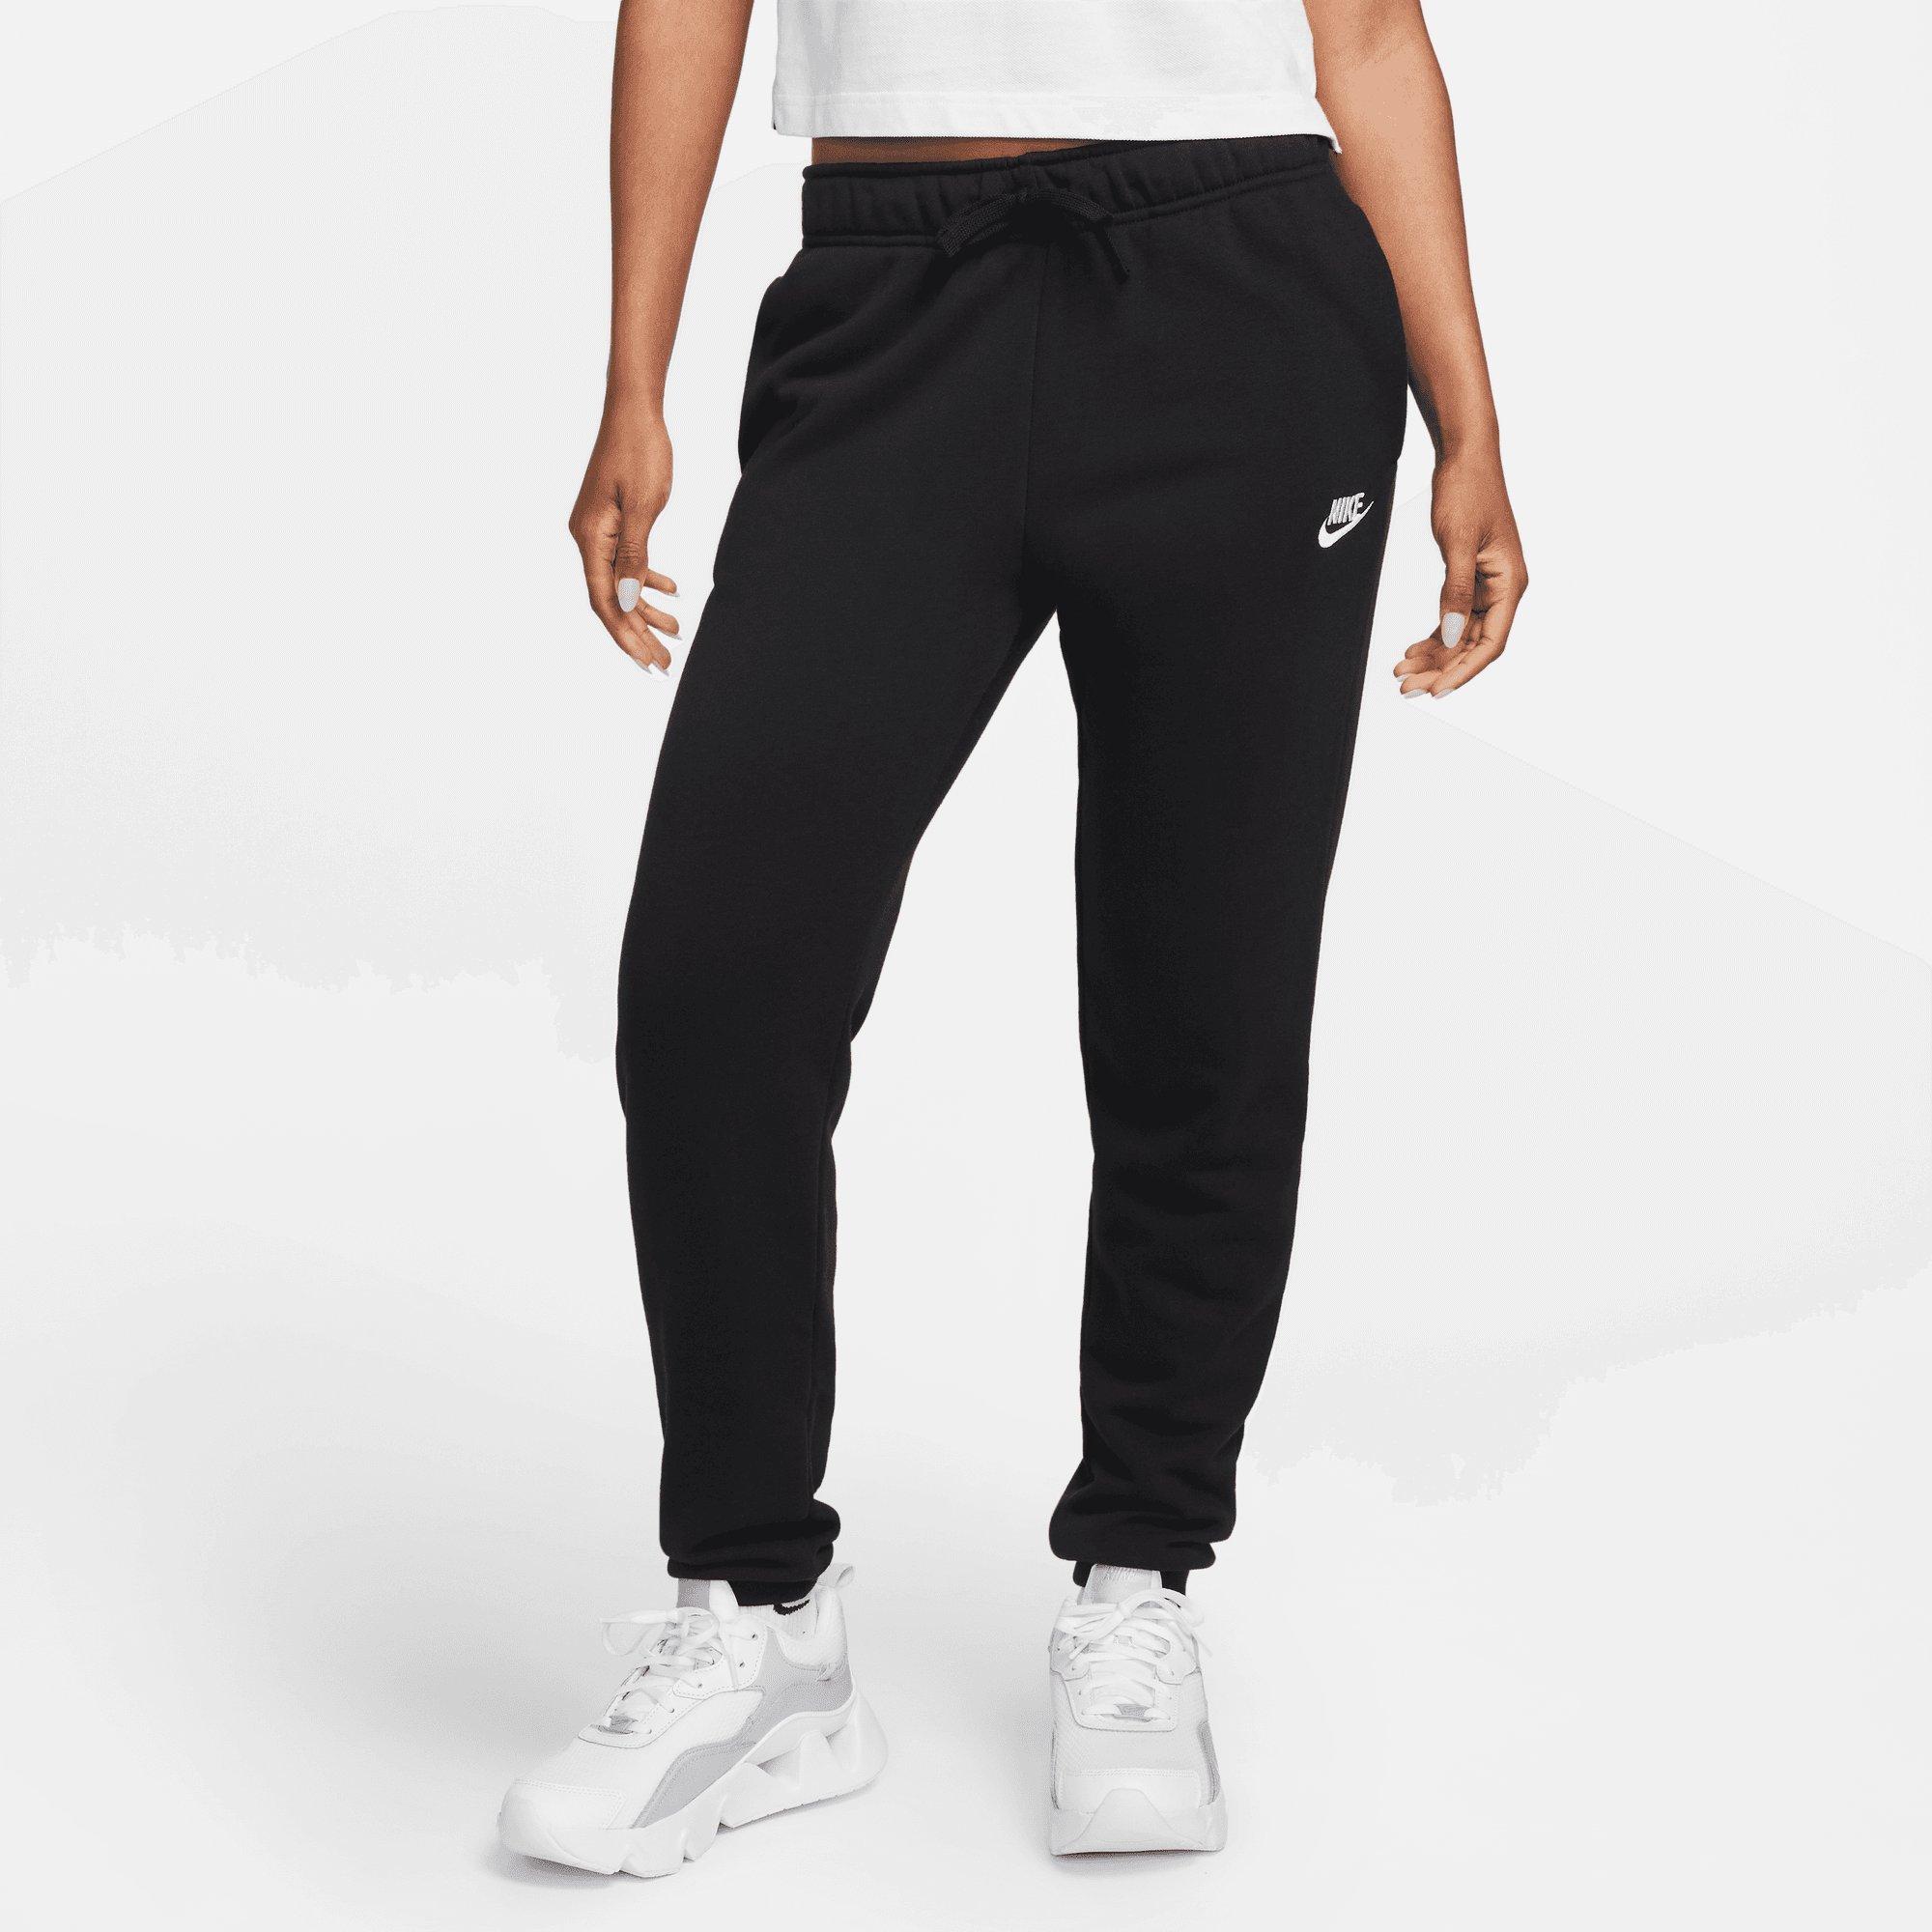 Nike Mens Fleece Cargo Pants - Black